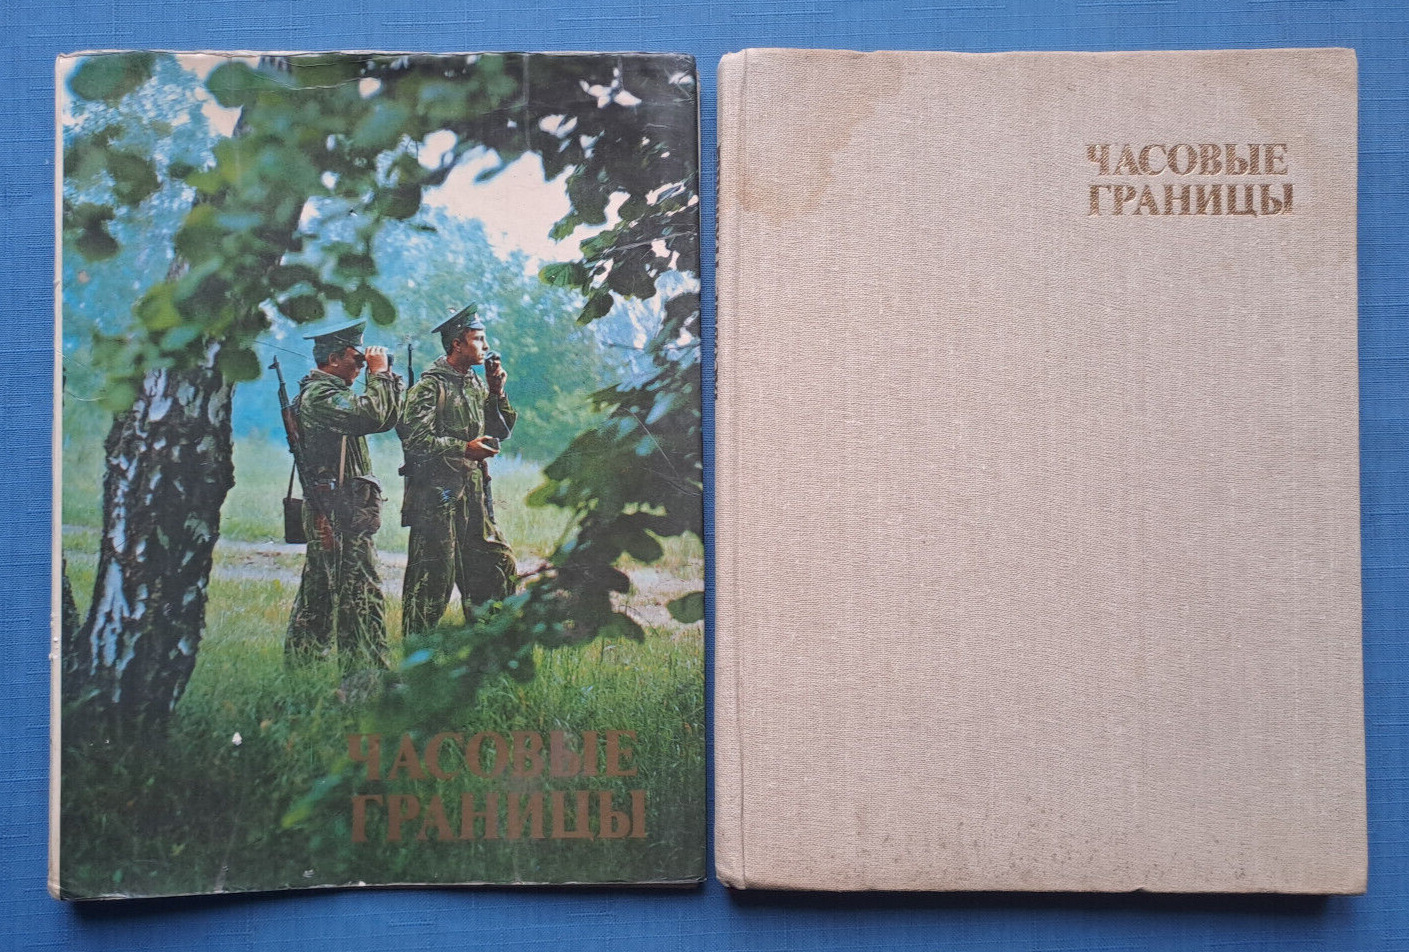 1984 Border Troops Guard Military Soviet Army KGB Photo album Russian book